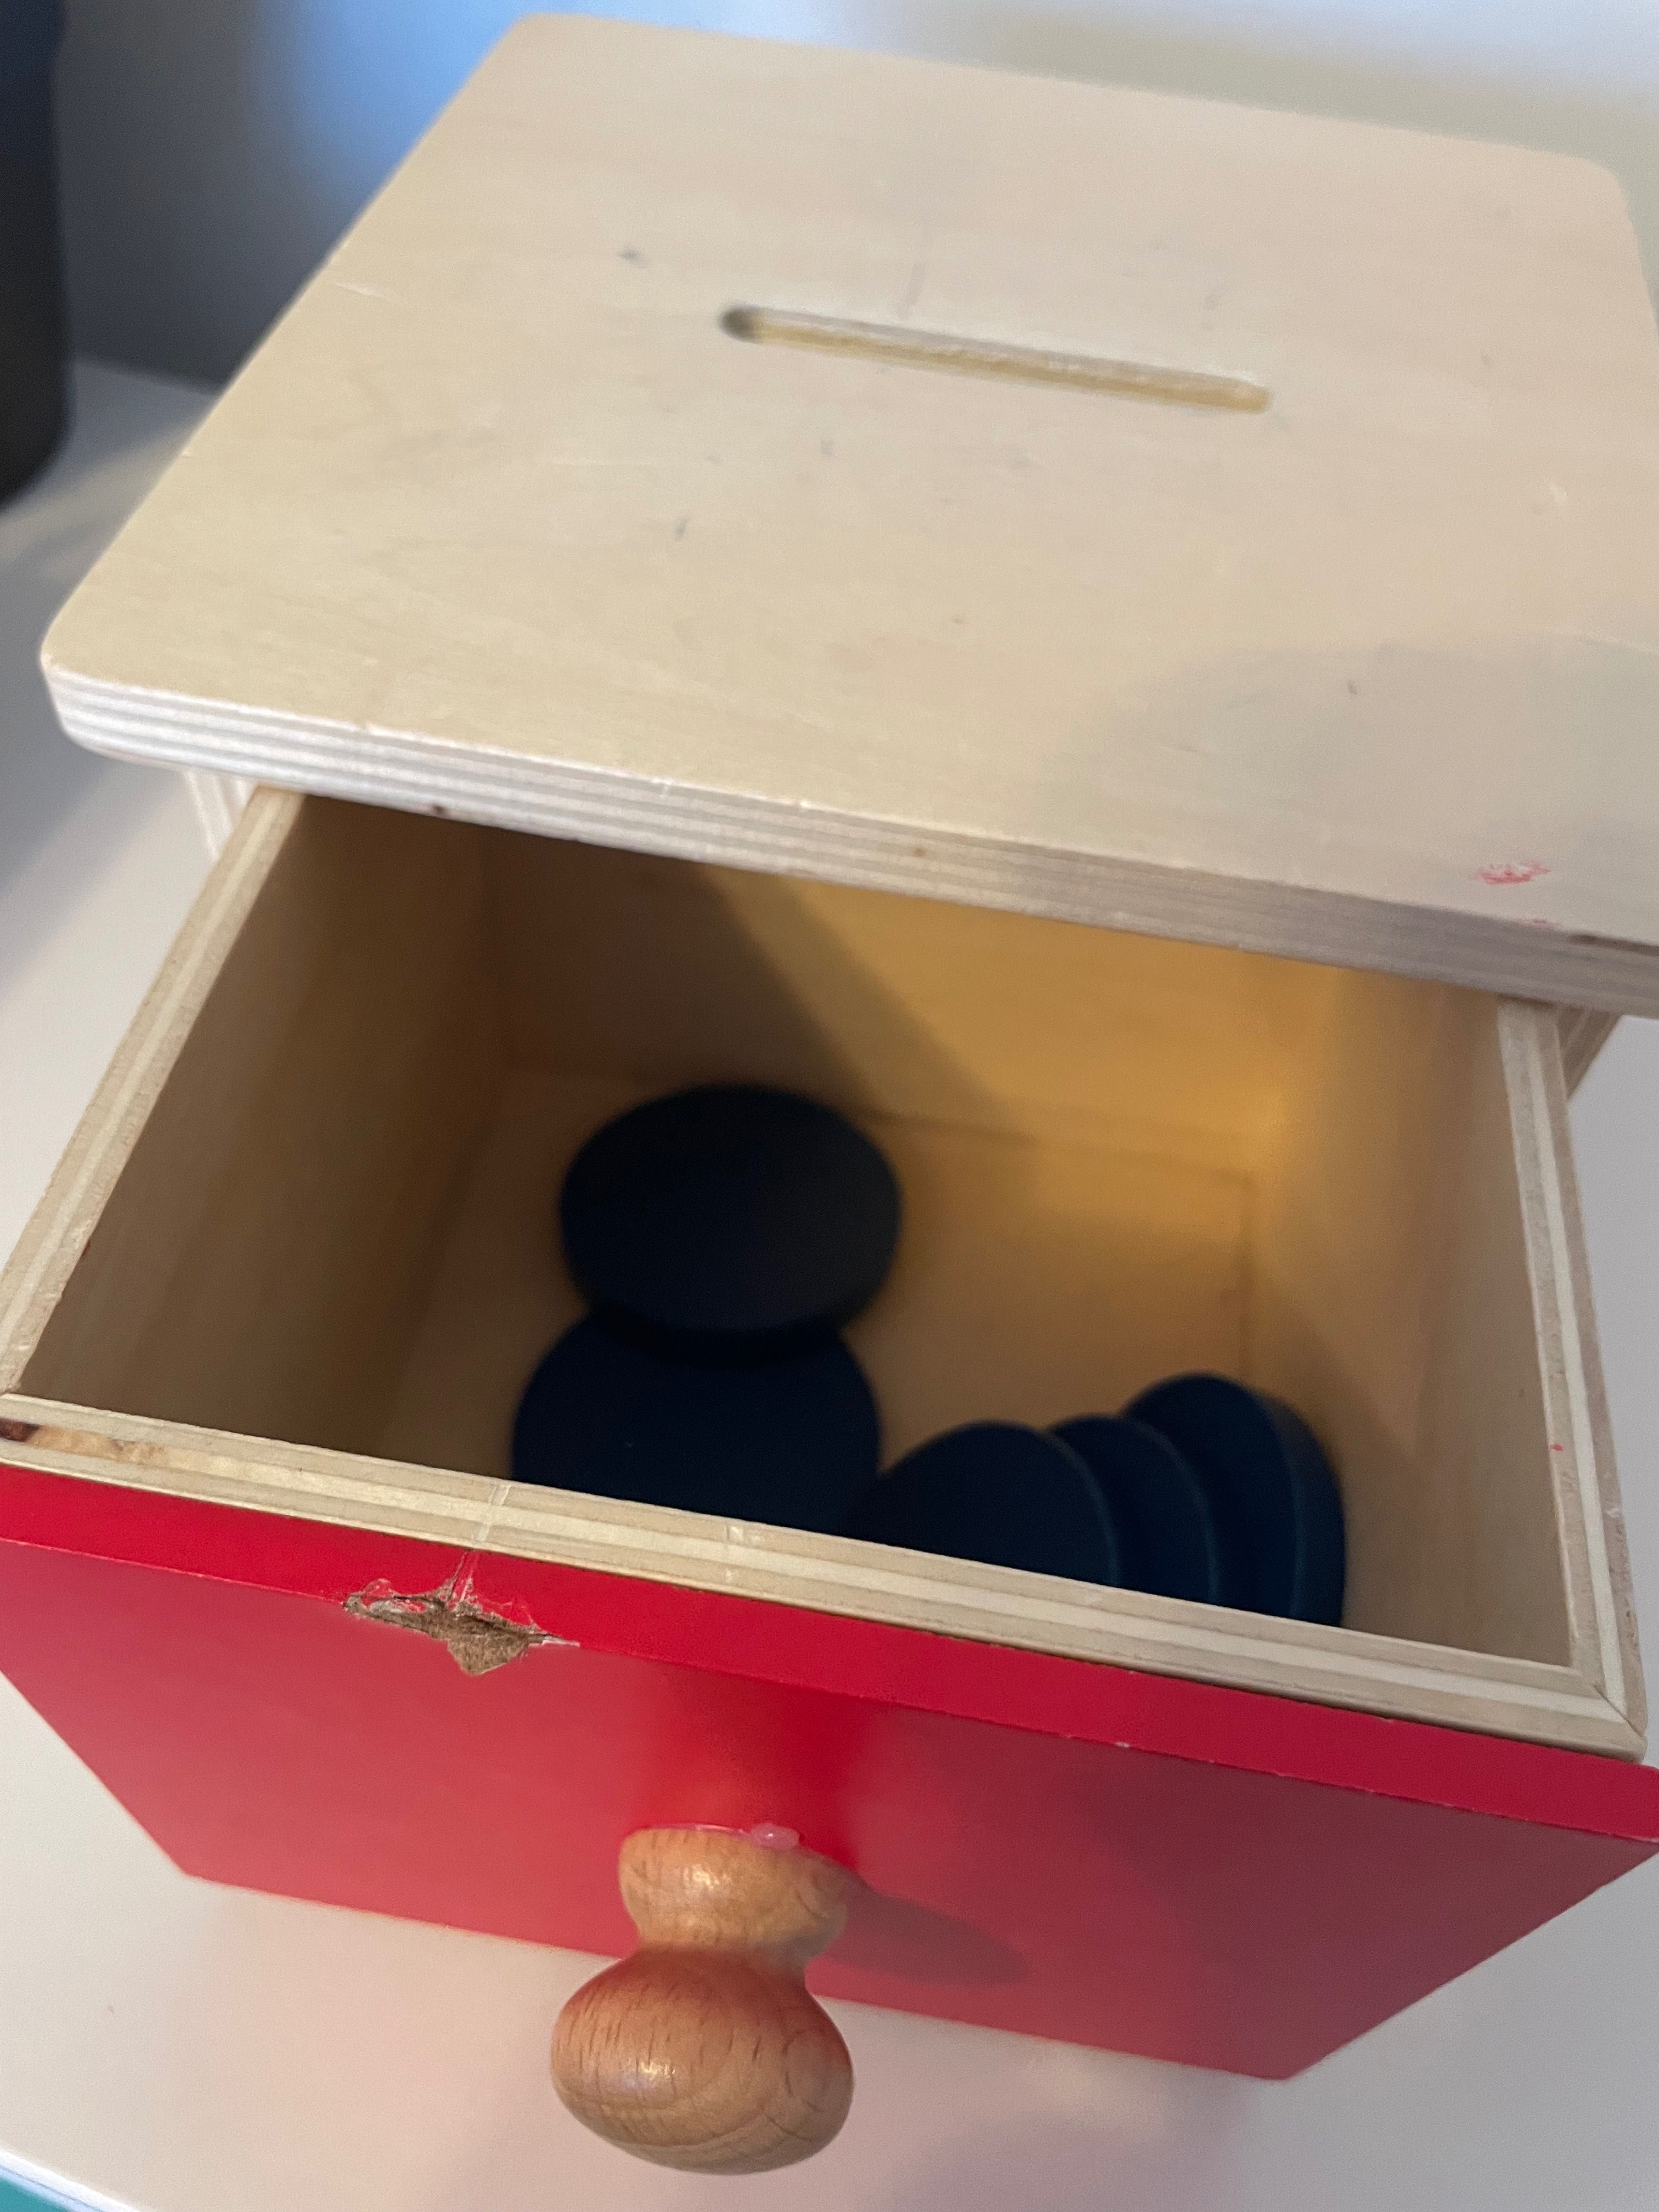 Монтесори играчки - Кутия с чекмедже и жетони, Сортер-вертикална ос